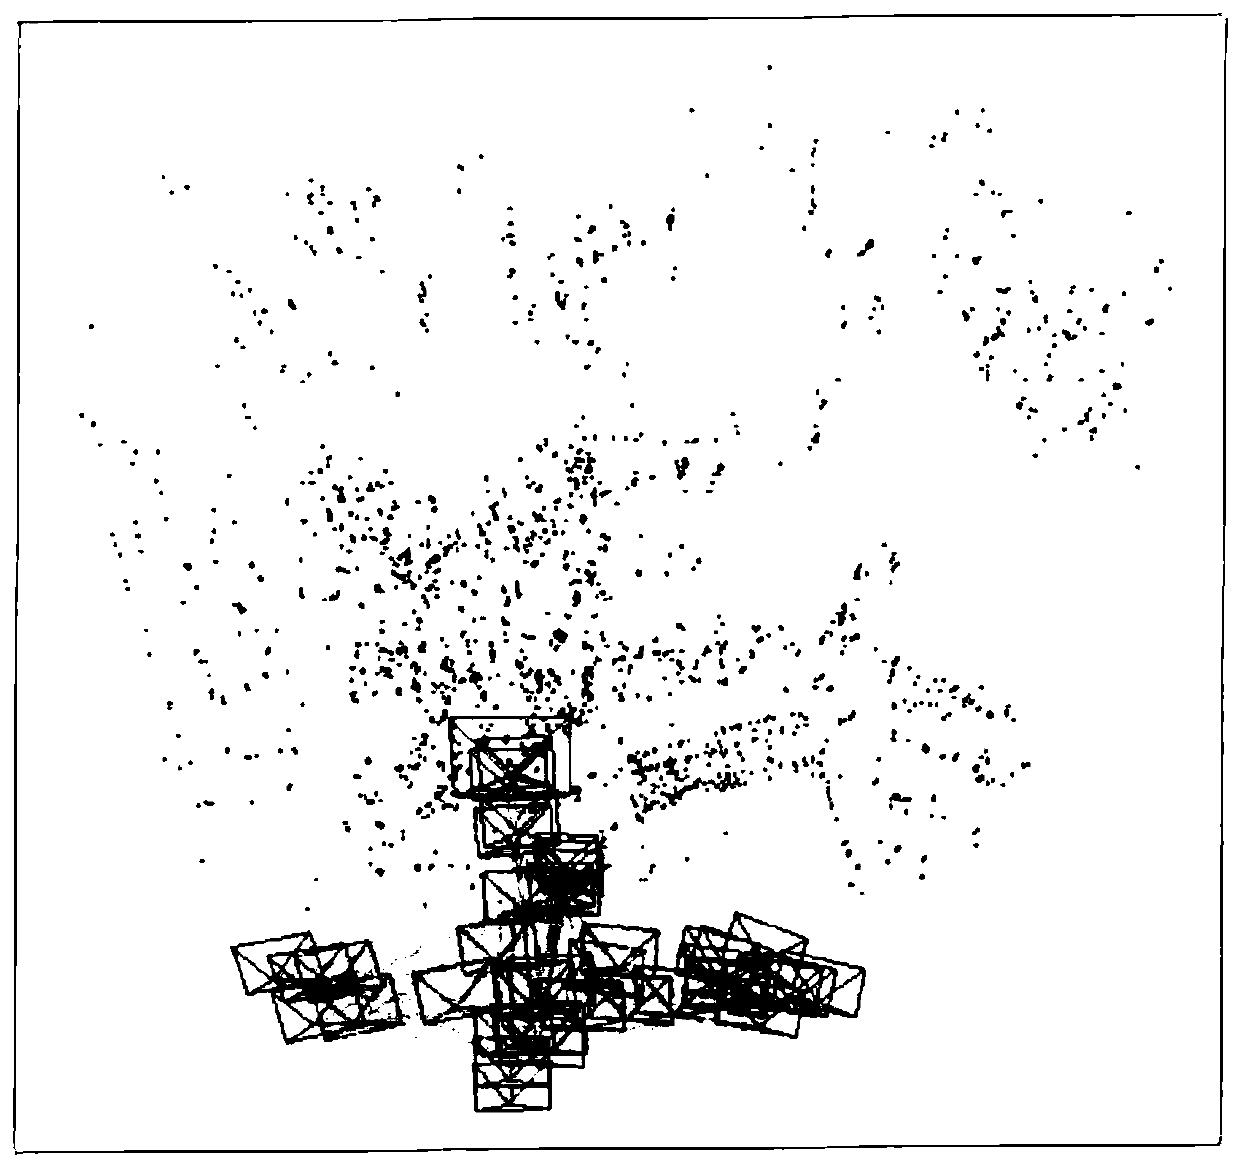 Unmanned aerial vehicle autonomous navigation method of imitating homing pigeon geomorphic perception homing mechanism